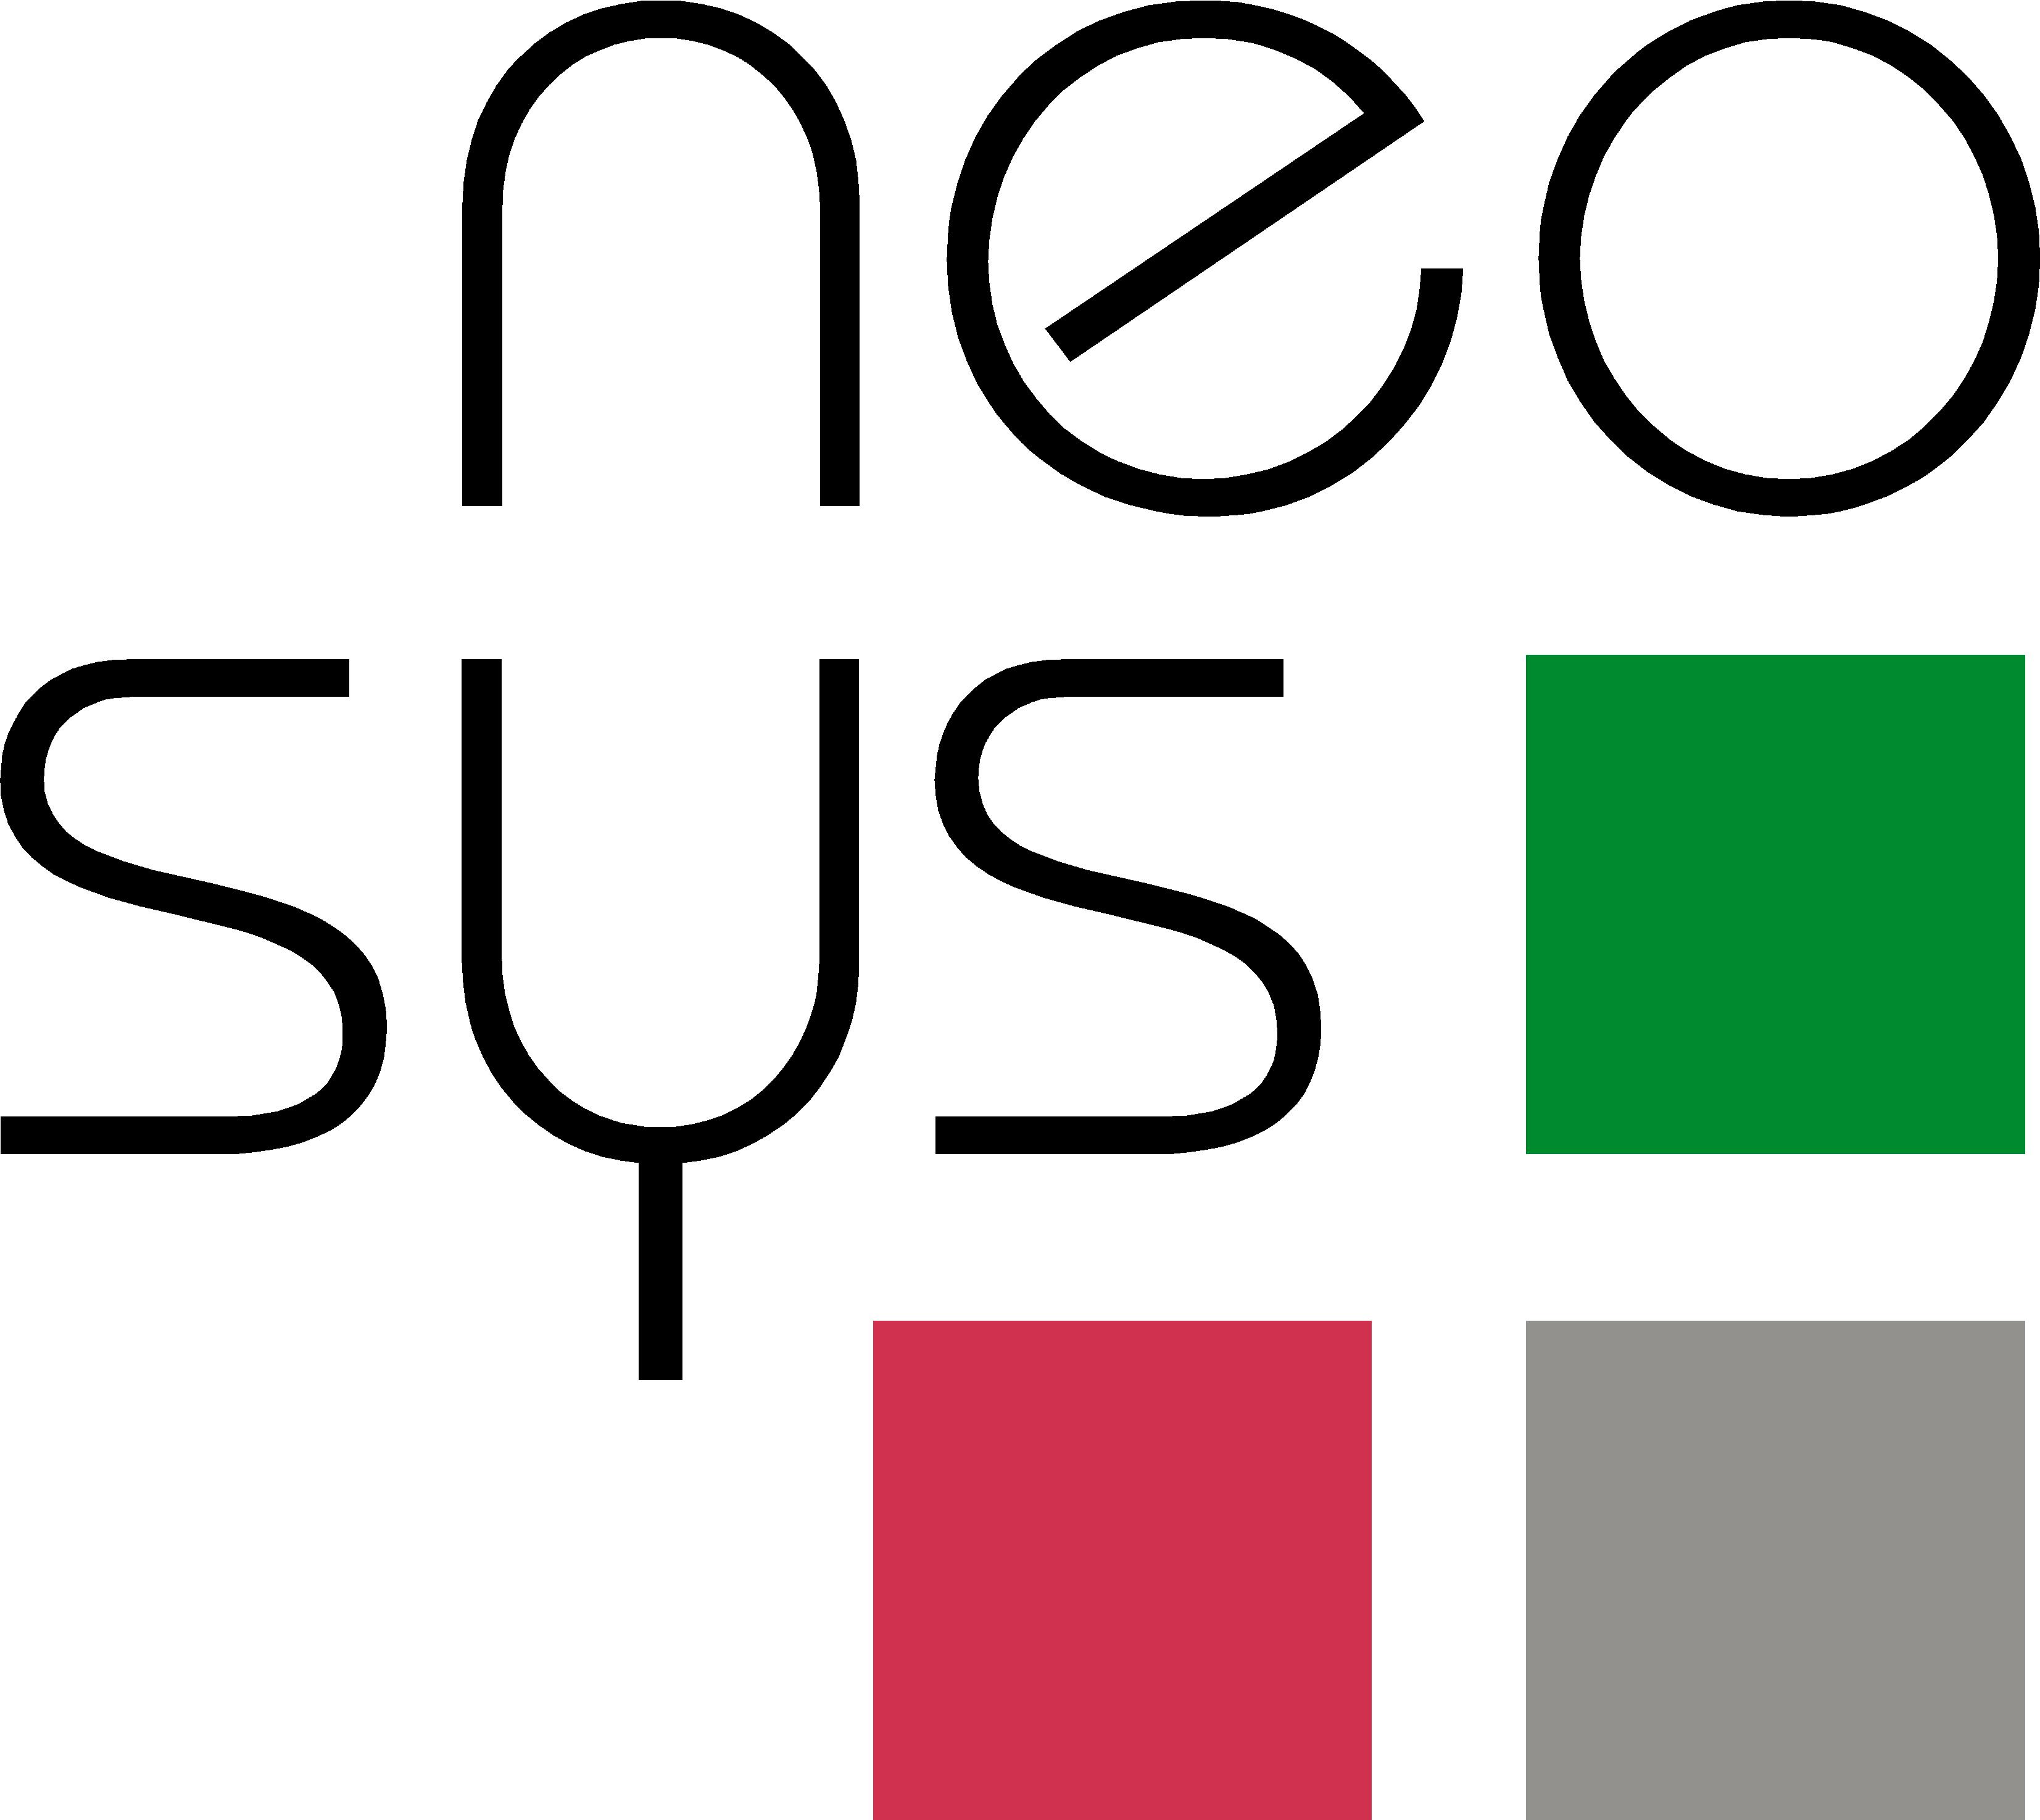 Neosys AG